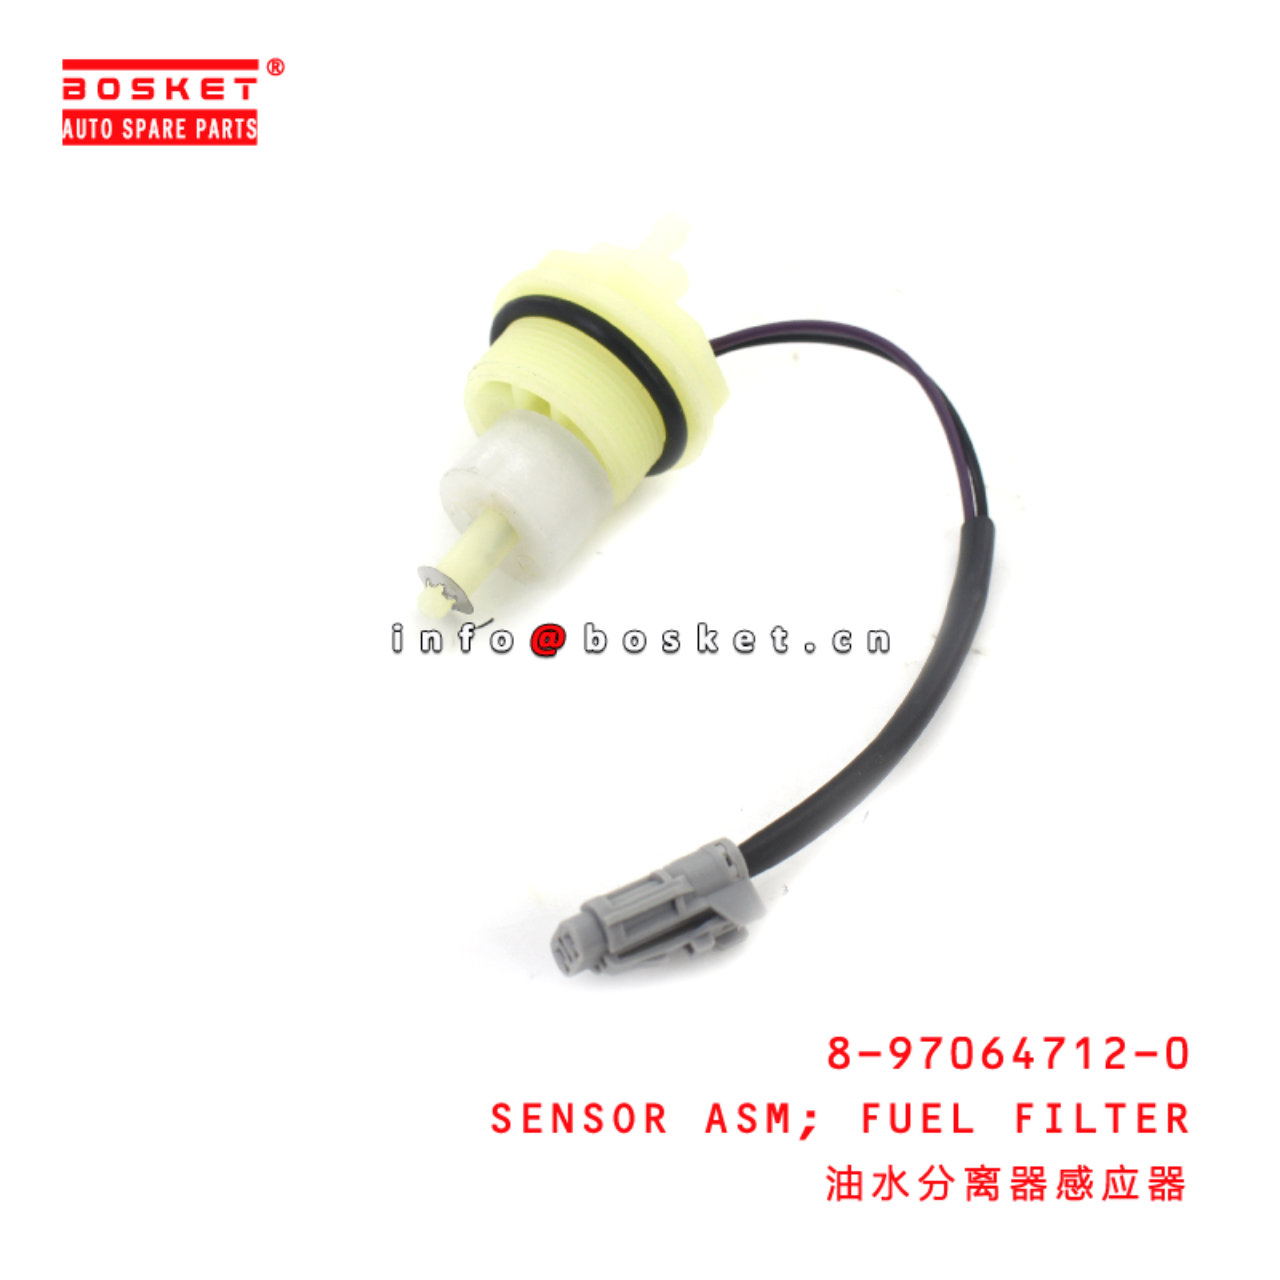 8-97064712-0 Fuel Filter Sensor Assembly suitable for ISUZU 700P 4HK1 4KH1 8970647120